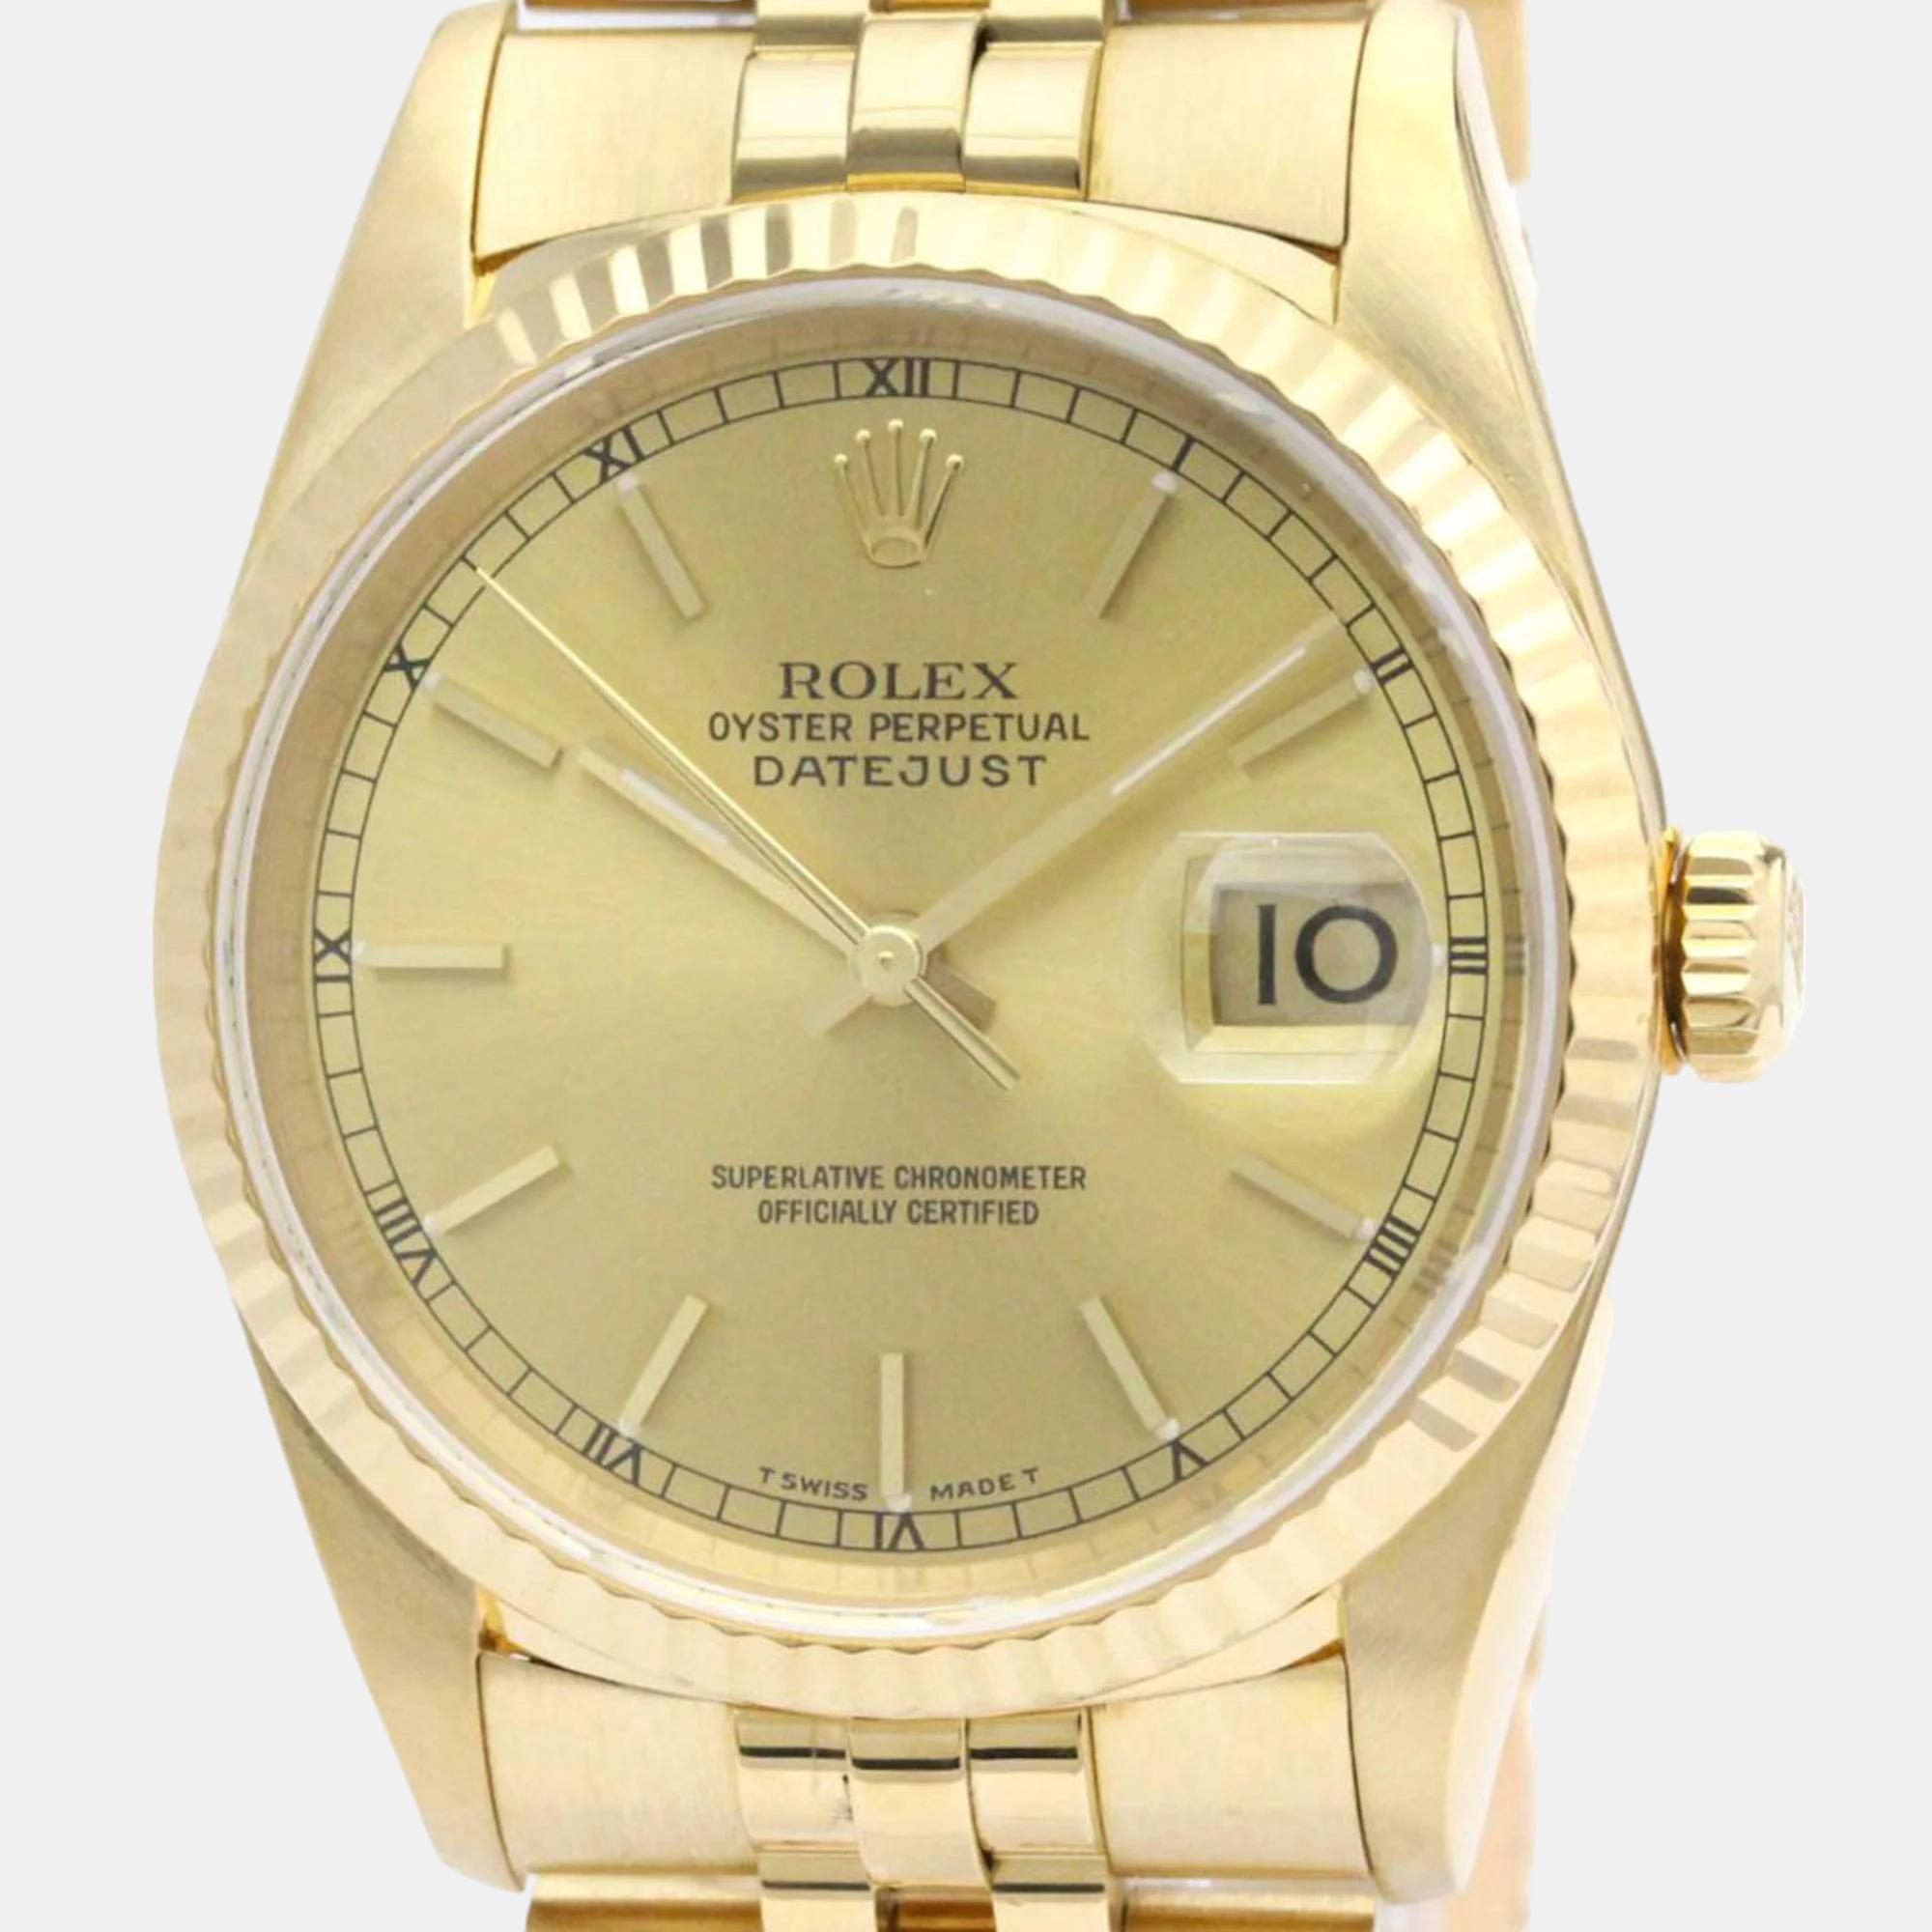 Rolex champagne 18k yellow gold datejust 16238 automatic men's wristwatch 36 mm